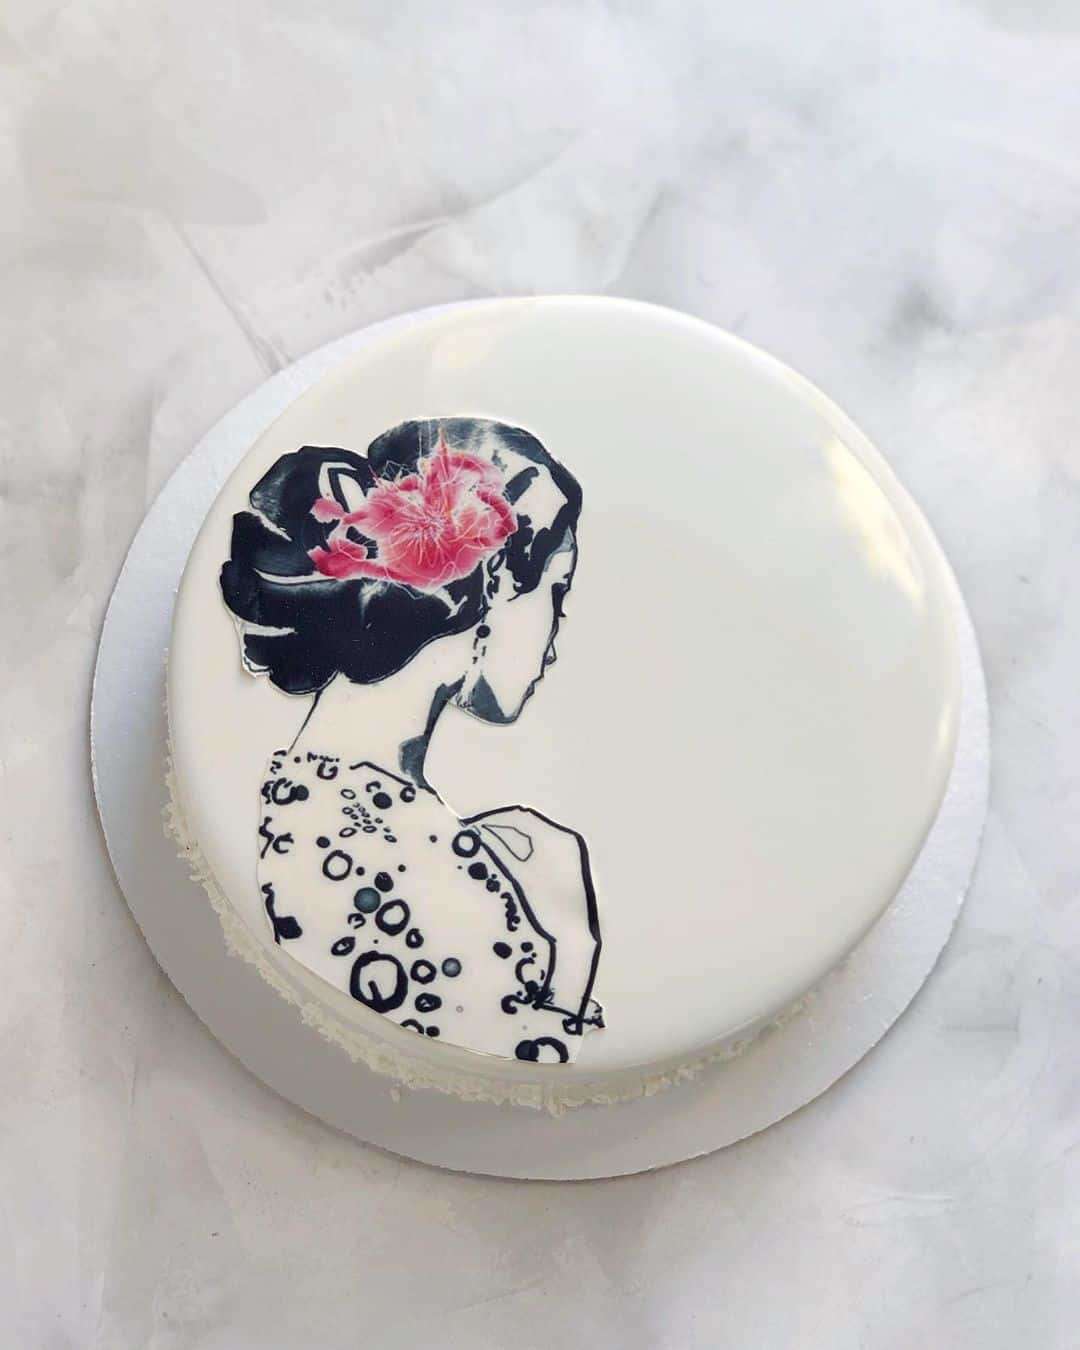 Beautifully Designed Cakes In Minimalist Style by Yuliya Ilkevich